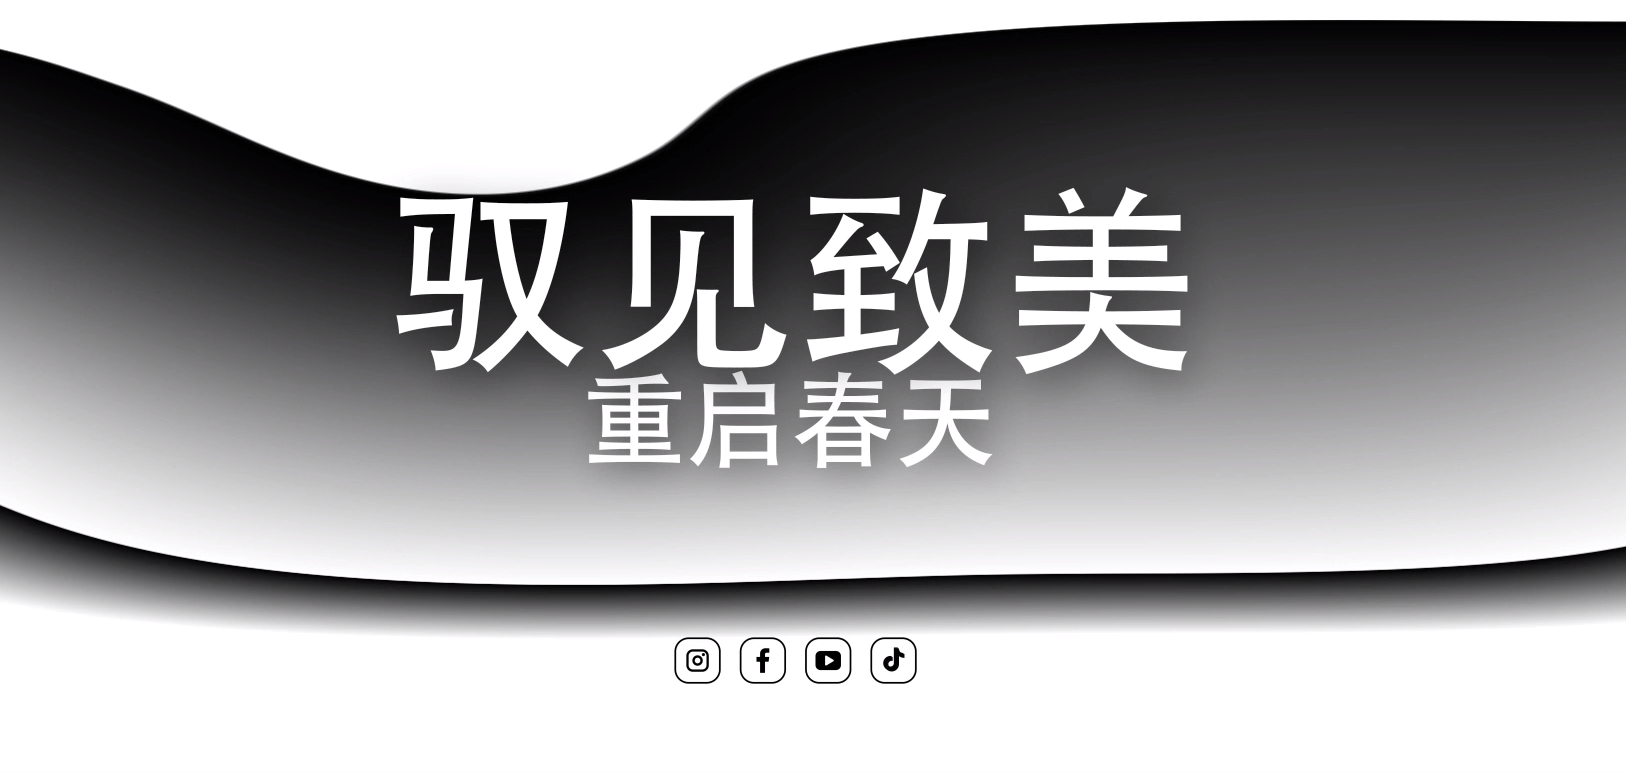 &amp|东风标致全新4008&amp;全新5008将于上海车展上市，全新设计语言抢眼